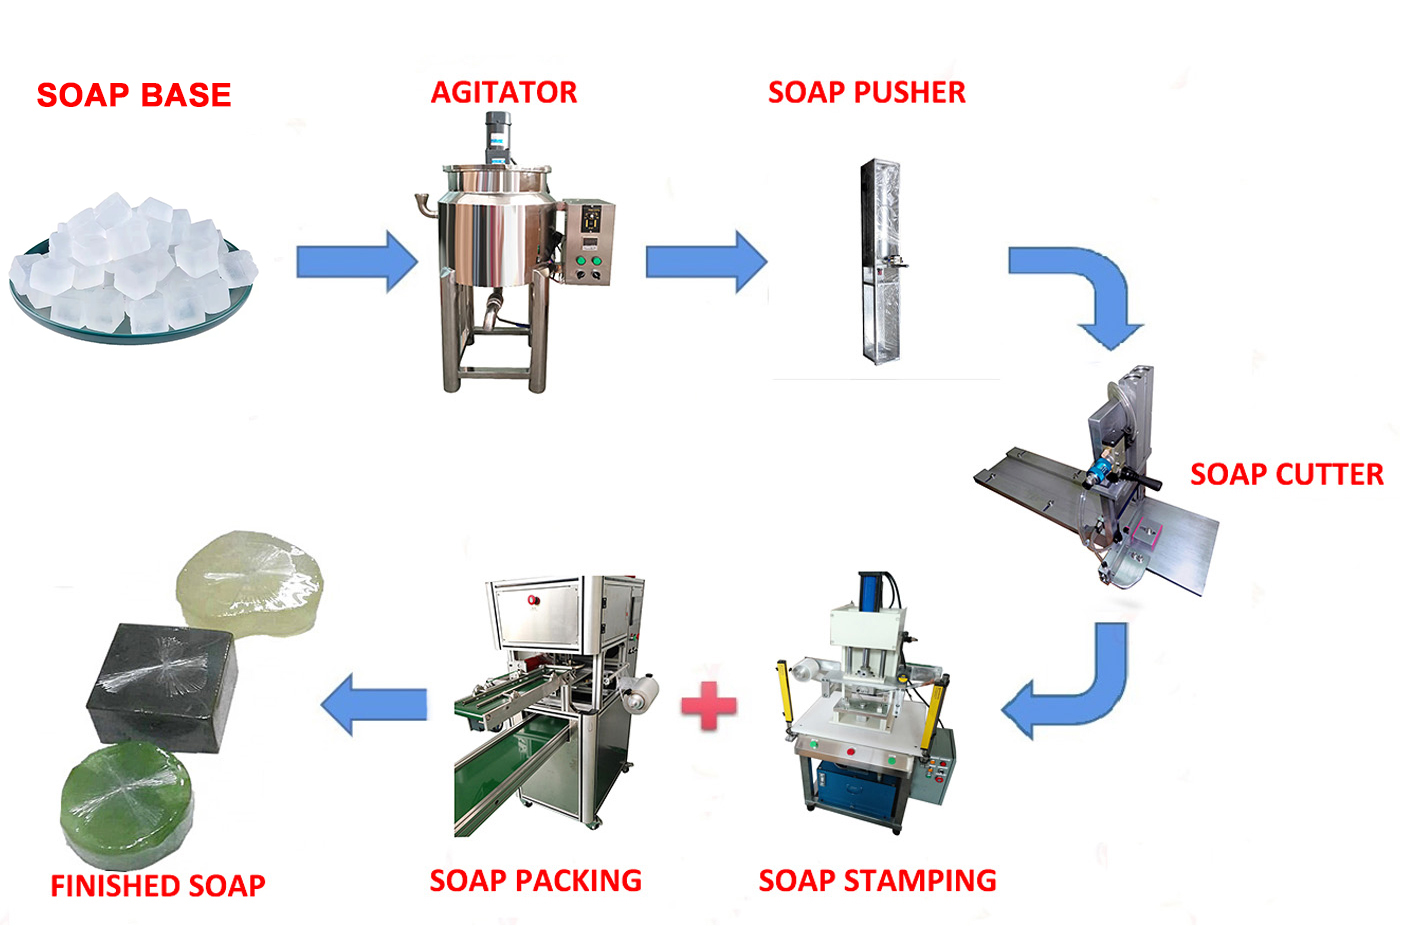 Basic soap making equipment